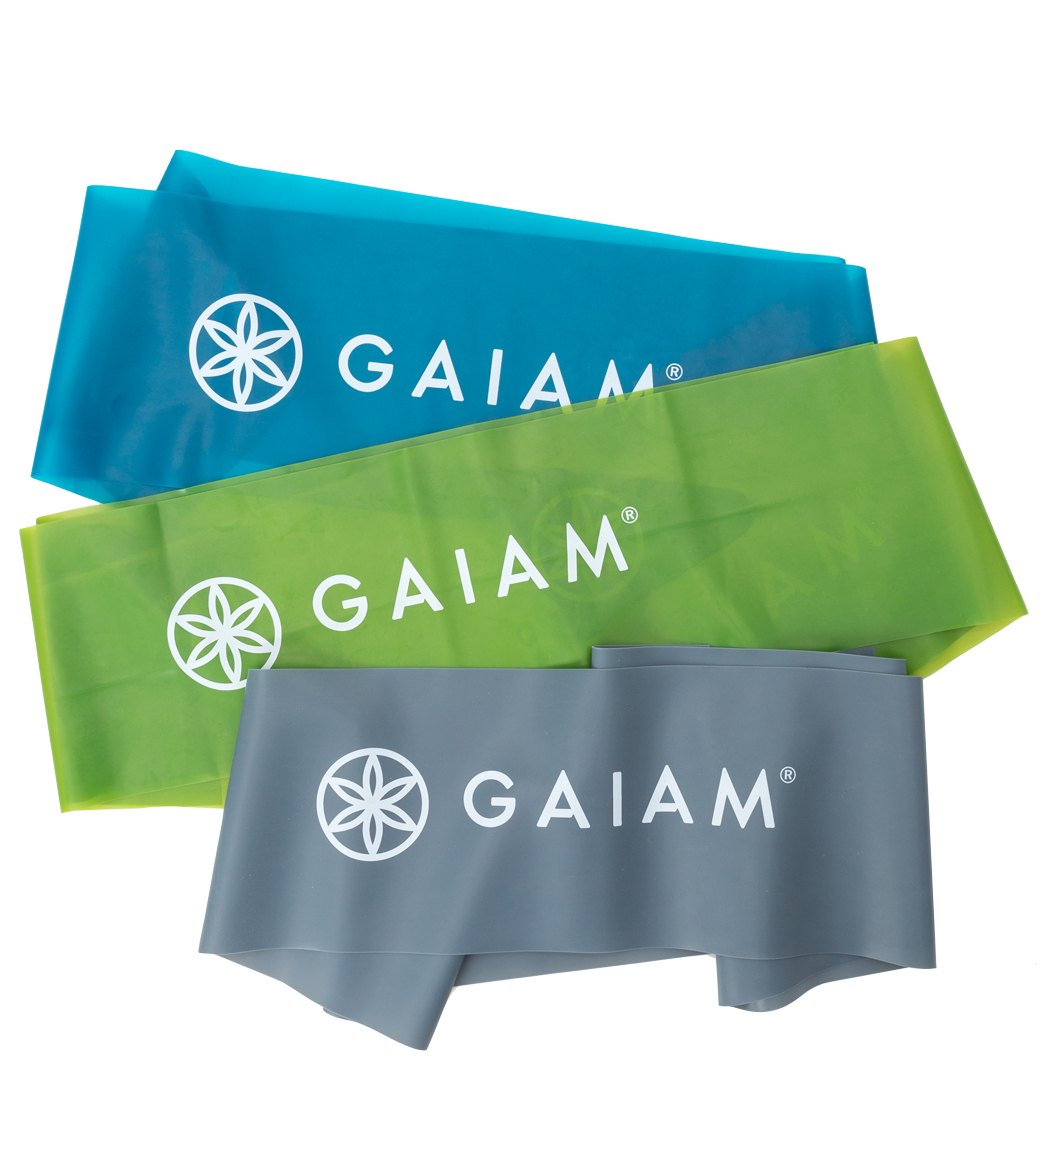 Gaiam Restore Strength & Flexibility Kit at